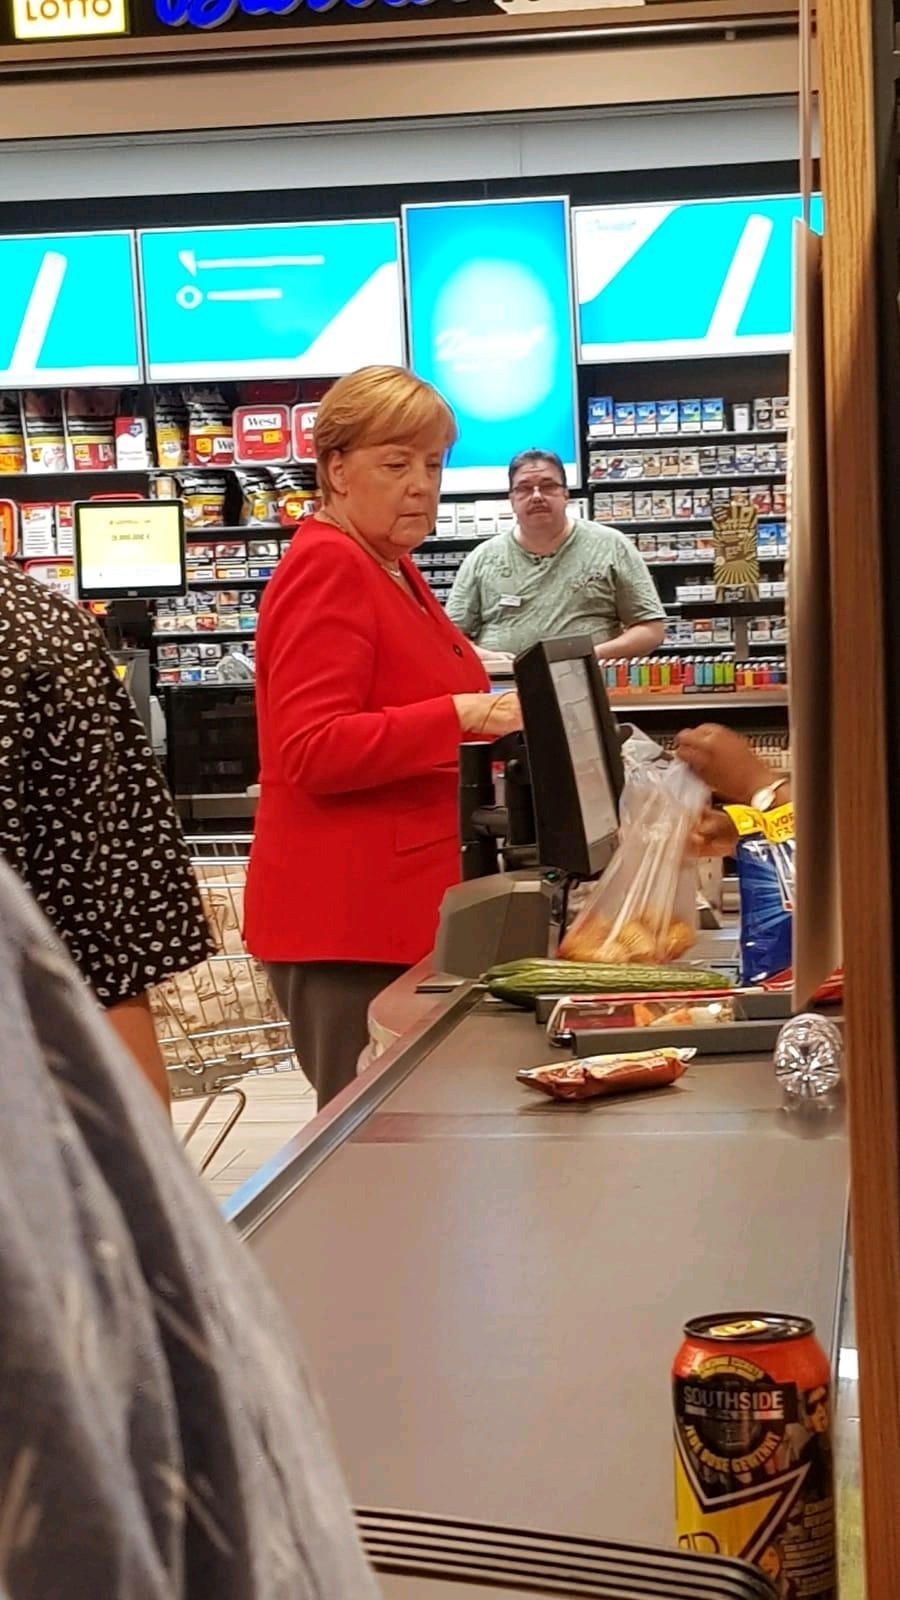 Supermarket in Germany - Germany, Supermarket, Angela Merkel